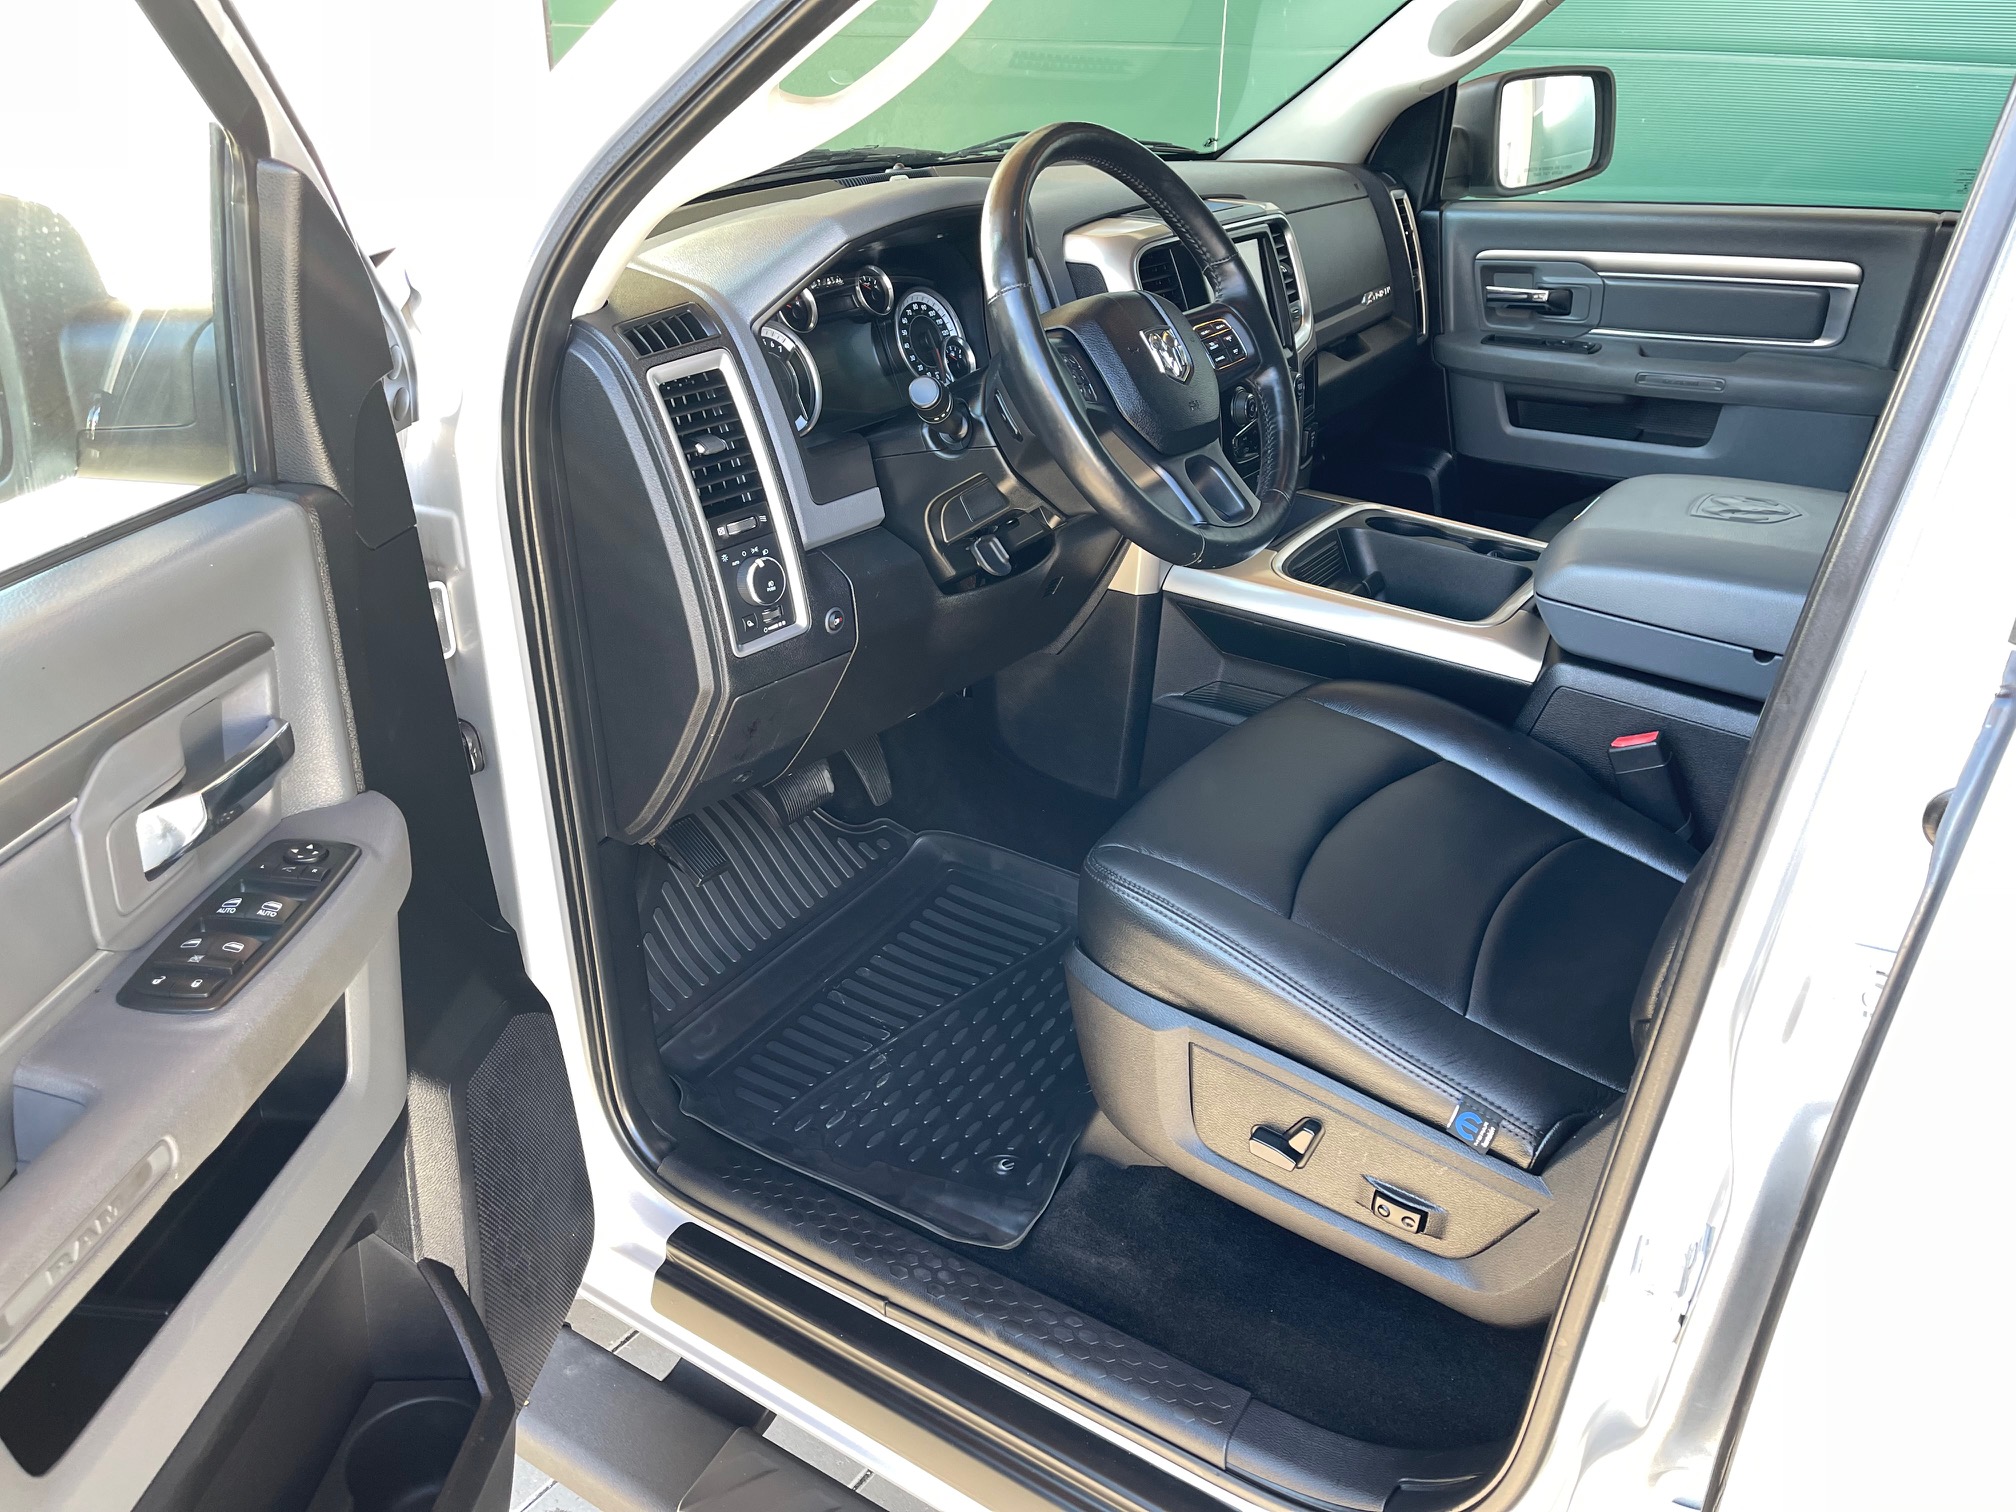 2016 Dodge Dodge Ram 1500 Classic V6 flex Fuel zu verkaufen Schweiz